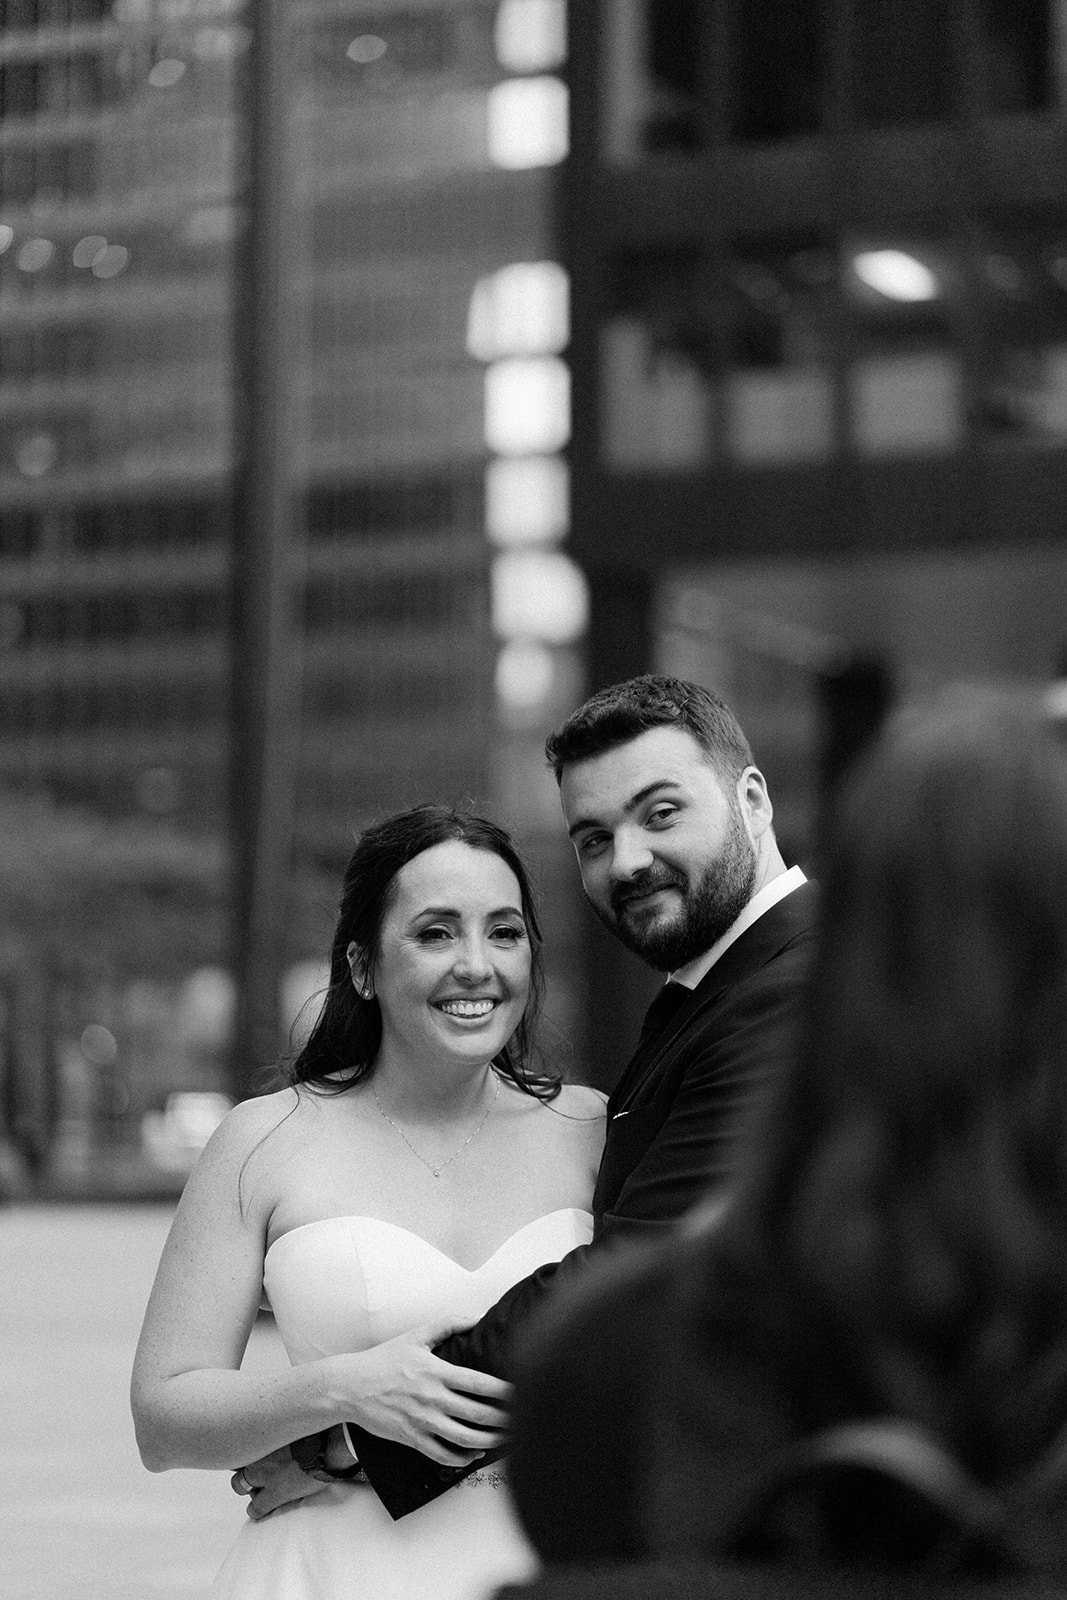 Wedding in Toronto photos by Effie Edits Inc